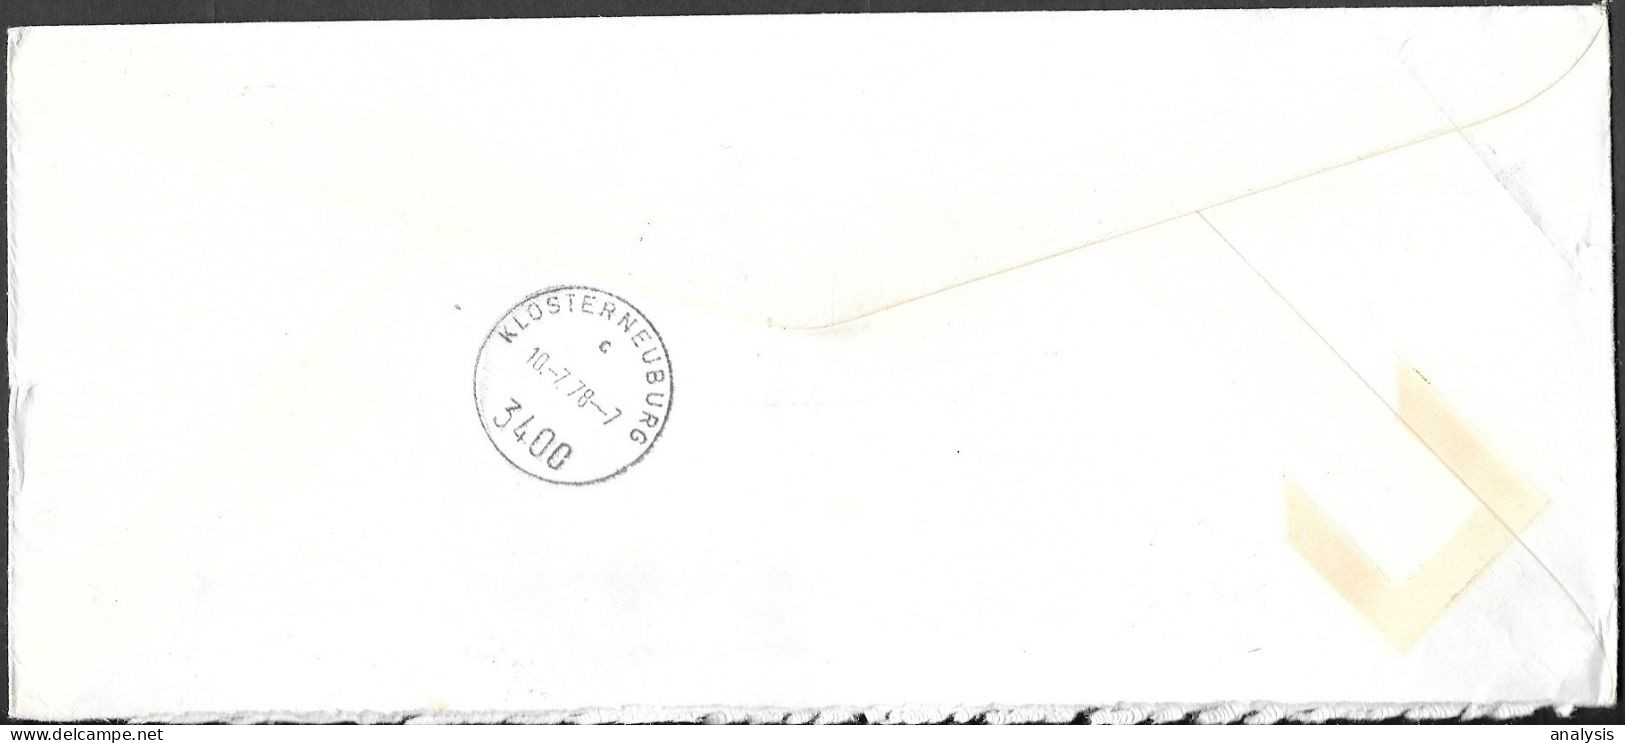 Argentina Registered Cover Mailed To Klosterneuburg Austria 1978. 1250P Rate Catedral De Salta Stamp - Cartas & Documentos